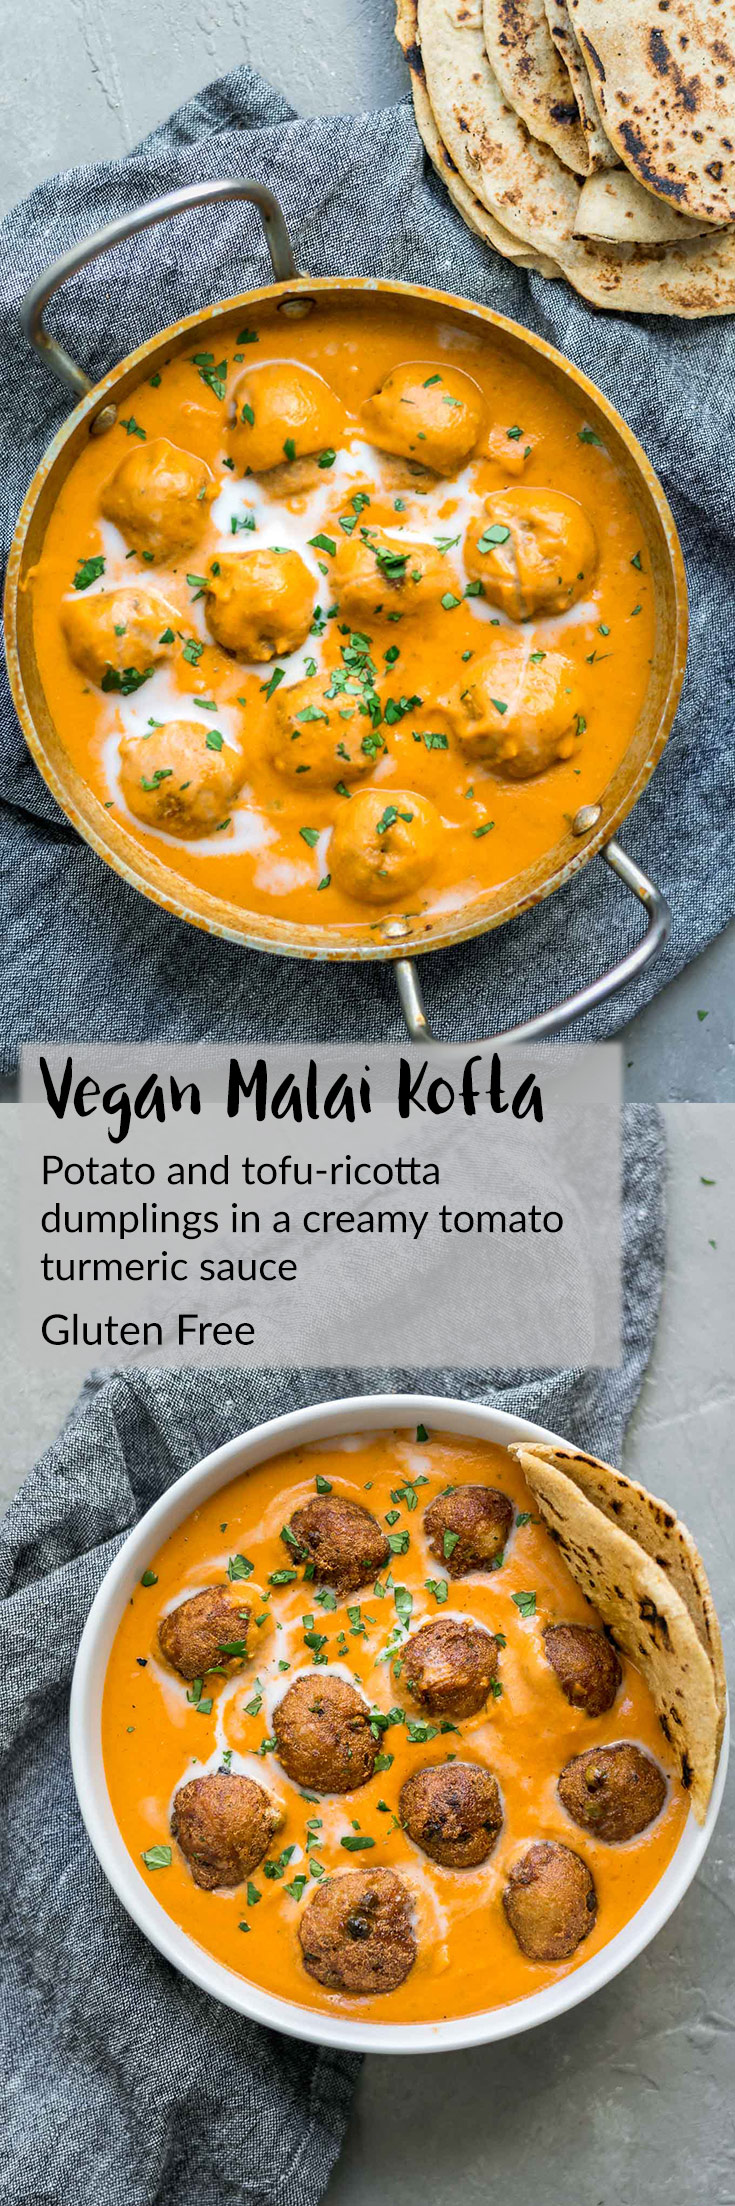 Vegan Malai Kofta: Indian dumplings in a curry tomato cream sauce | A vegan and naturally gluten free recipe. Enjoy with Indian flatbread or basmati rice.| thecuriouschickpea.com #vegan #veganrecipe #Indianfood #glutenfree